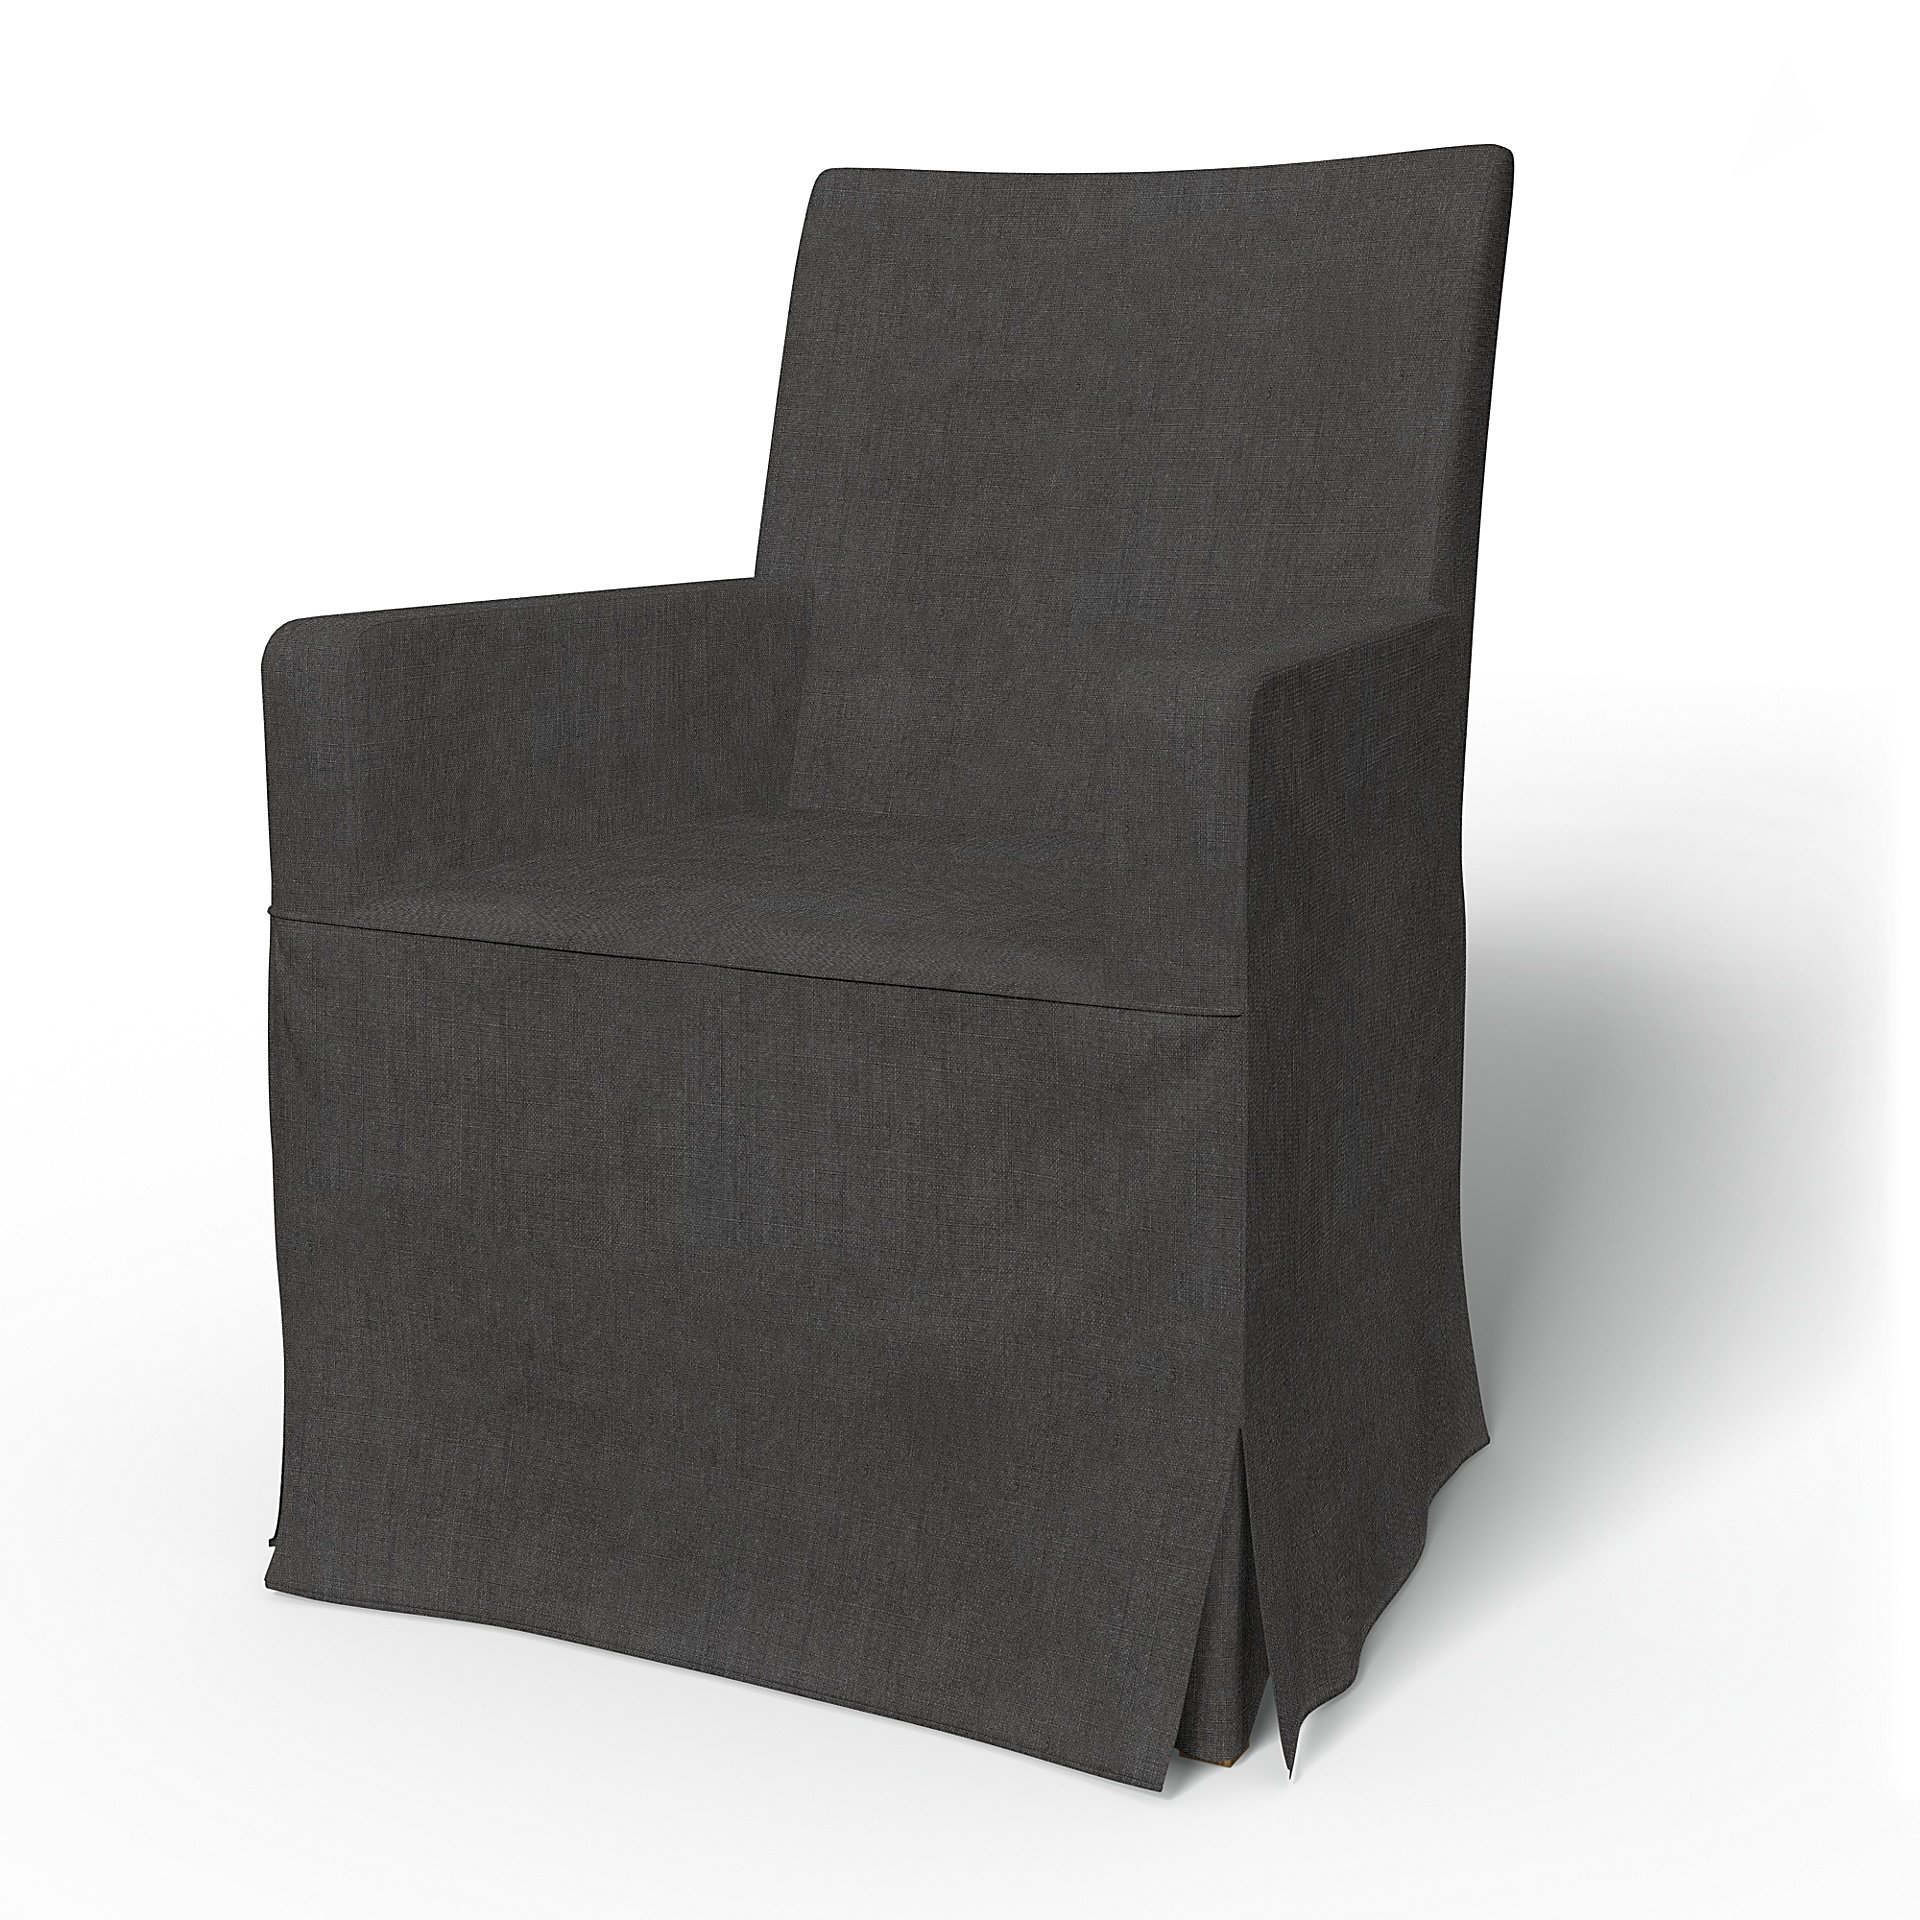 IKEA - Henriksdal, Chair cover w/ armrests, long skirt box pleat, Espresso, Linen - Bemz